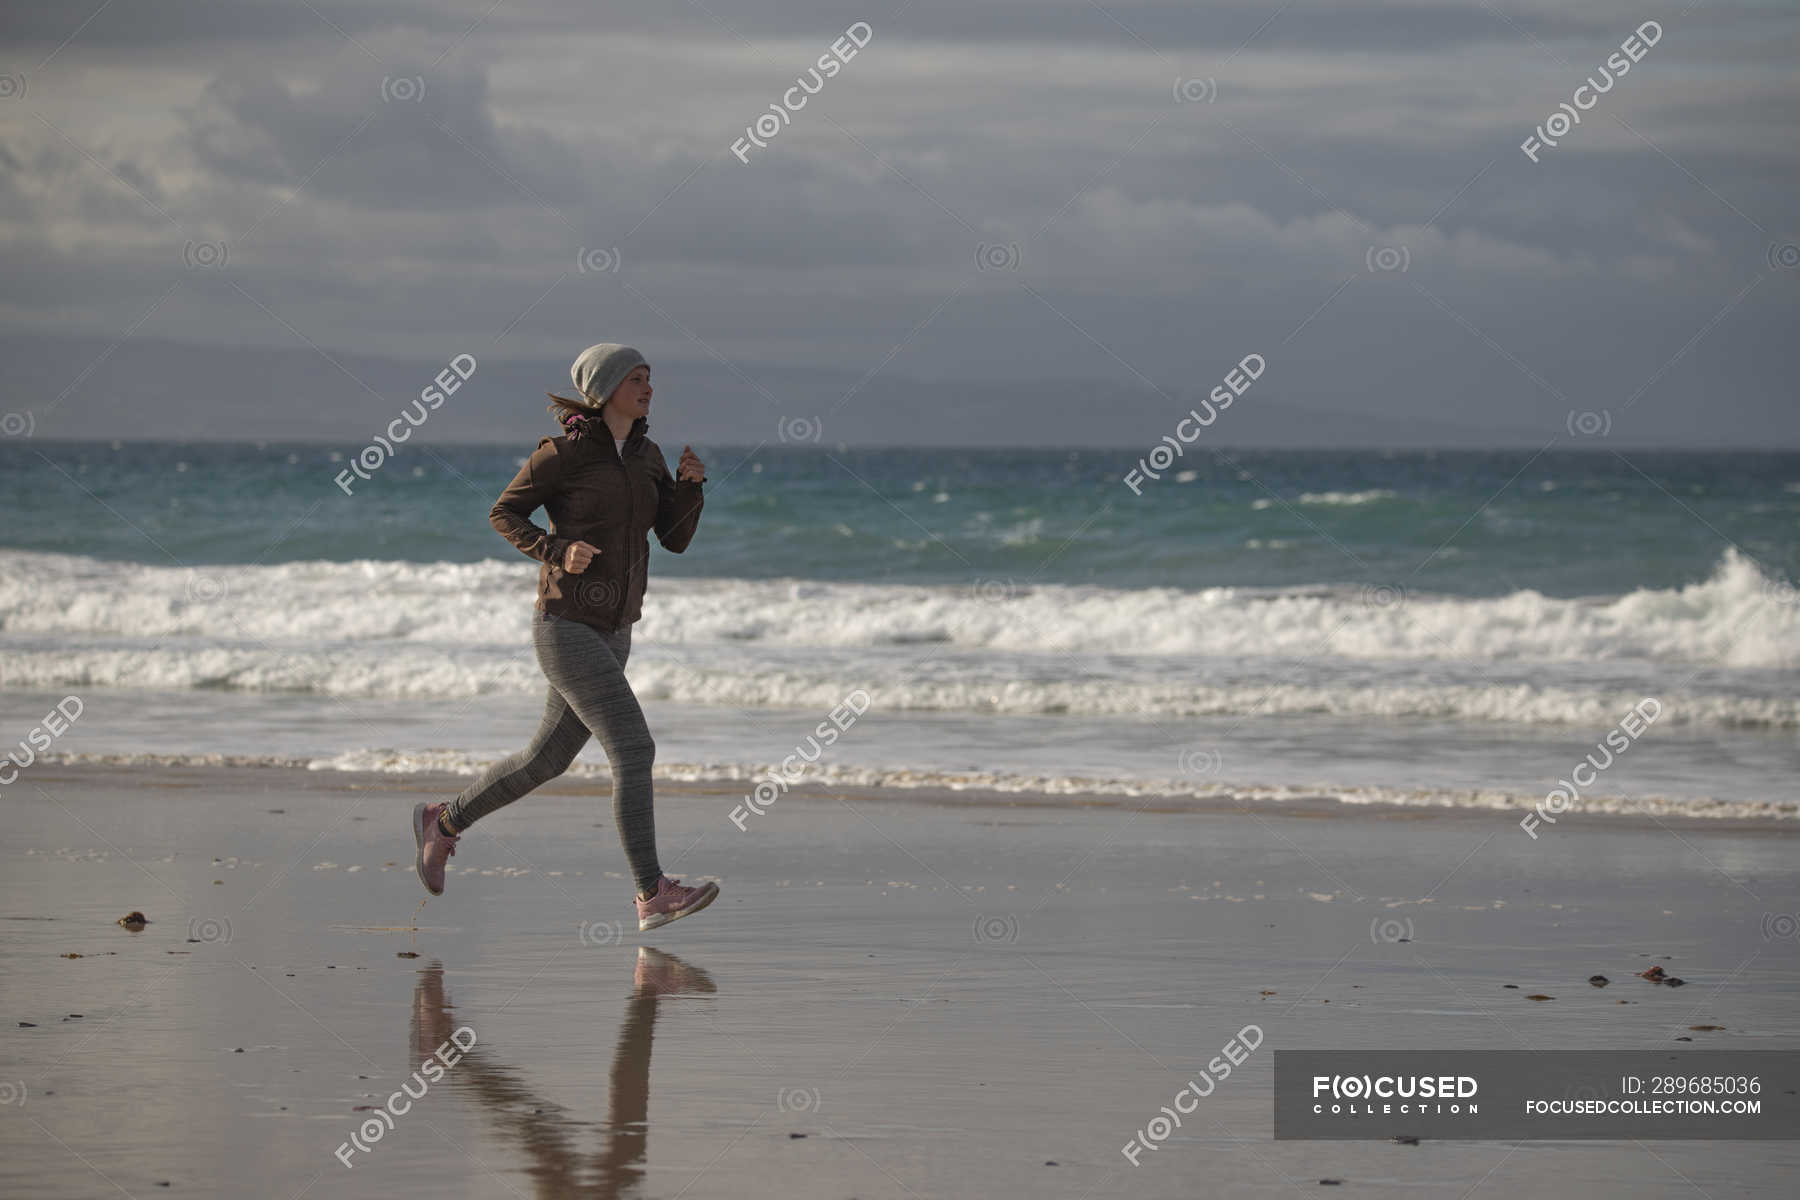 Female jogger at the beach — training, sea - Stock Photo | #289685036